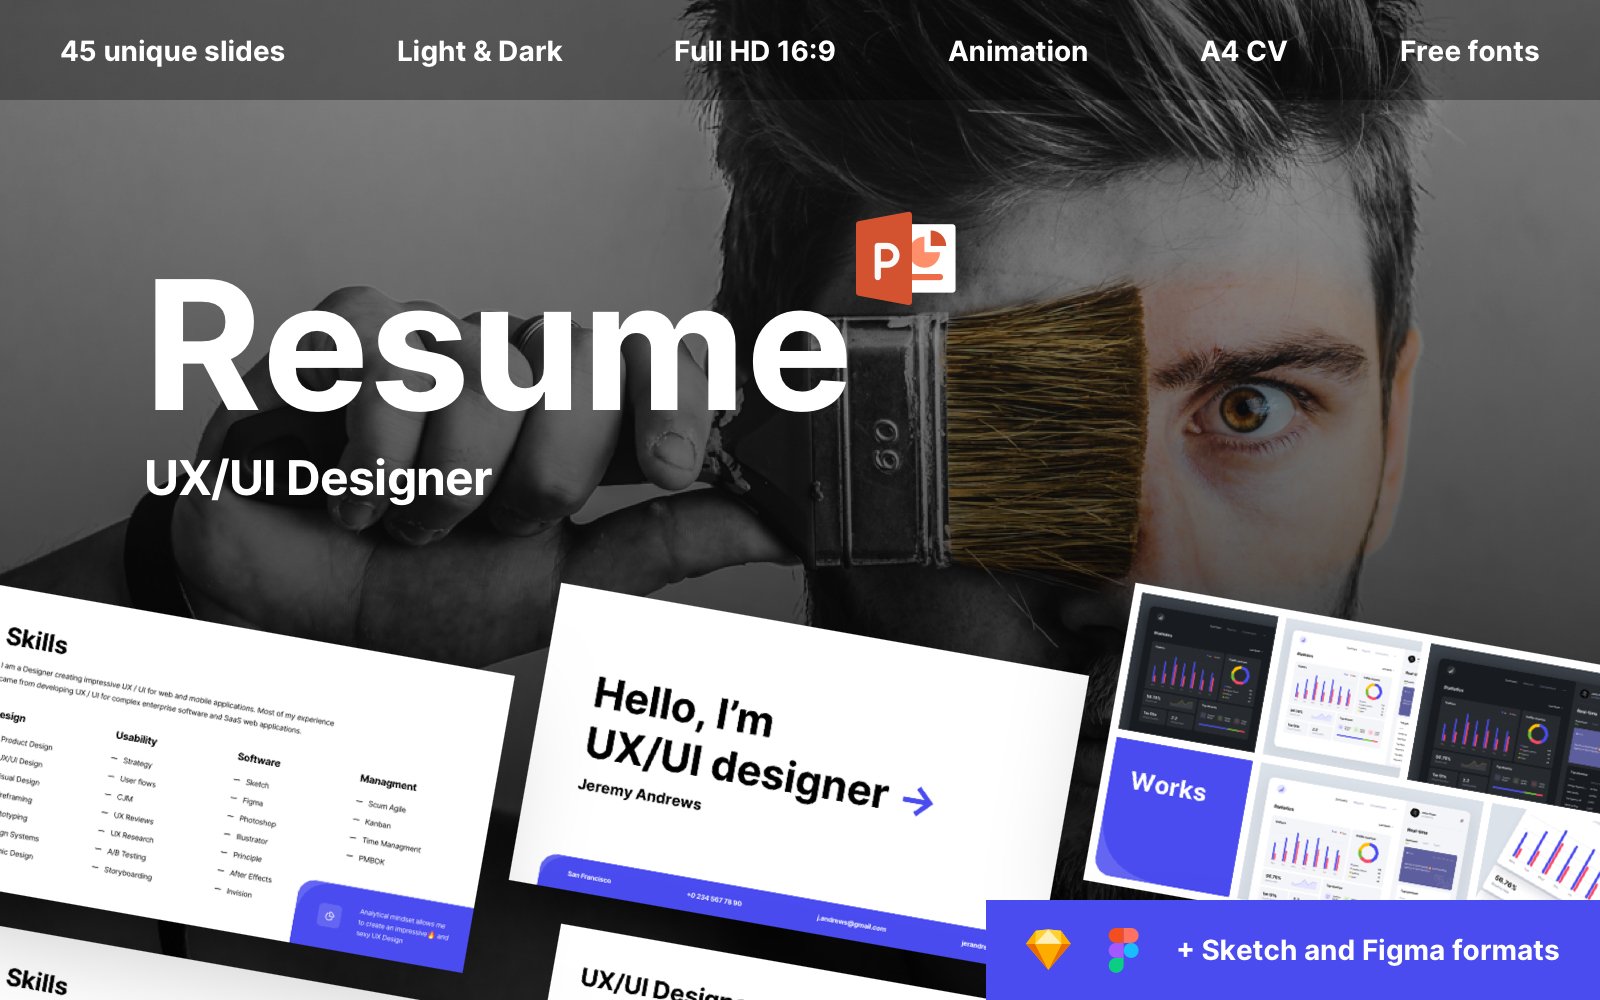 Resume UX/UI Designer PowerPoint template